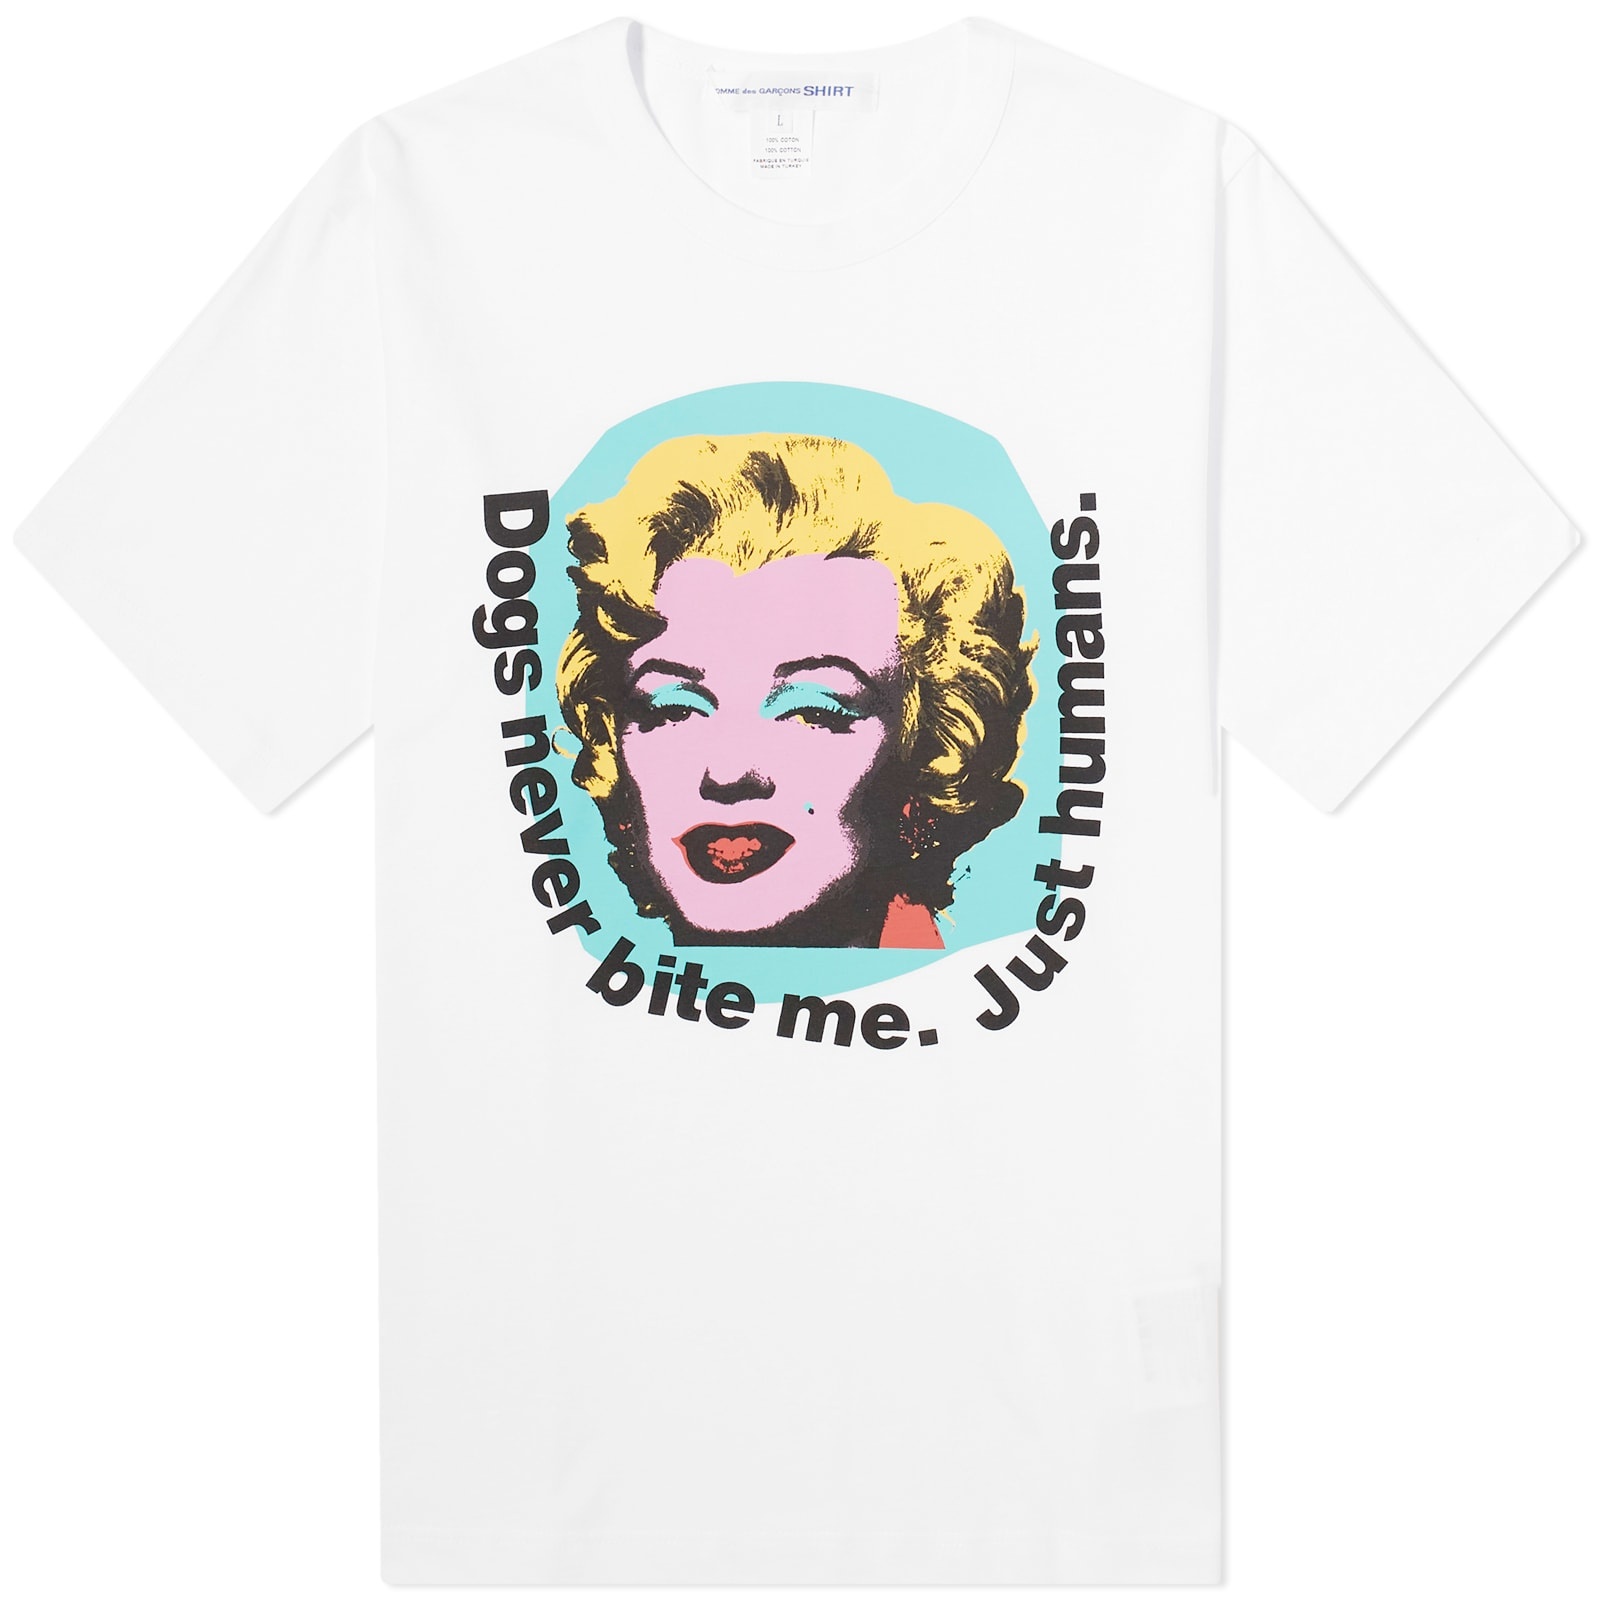 Comme des Garçons SHIRT x Andy Warhol Marilyn Monroe T-Shirt - 1